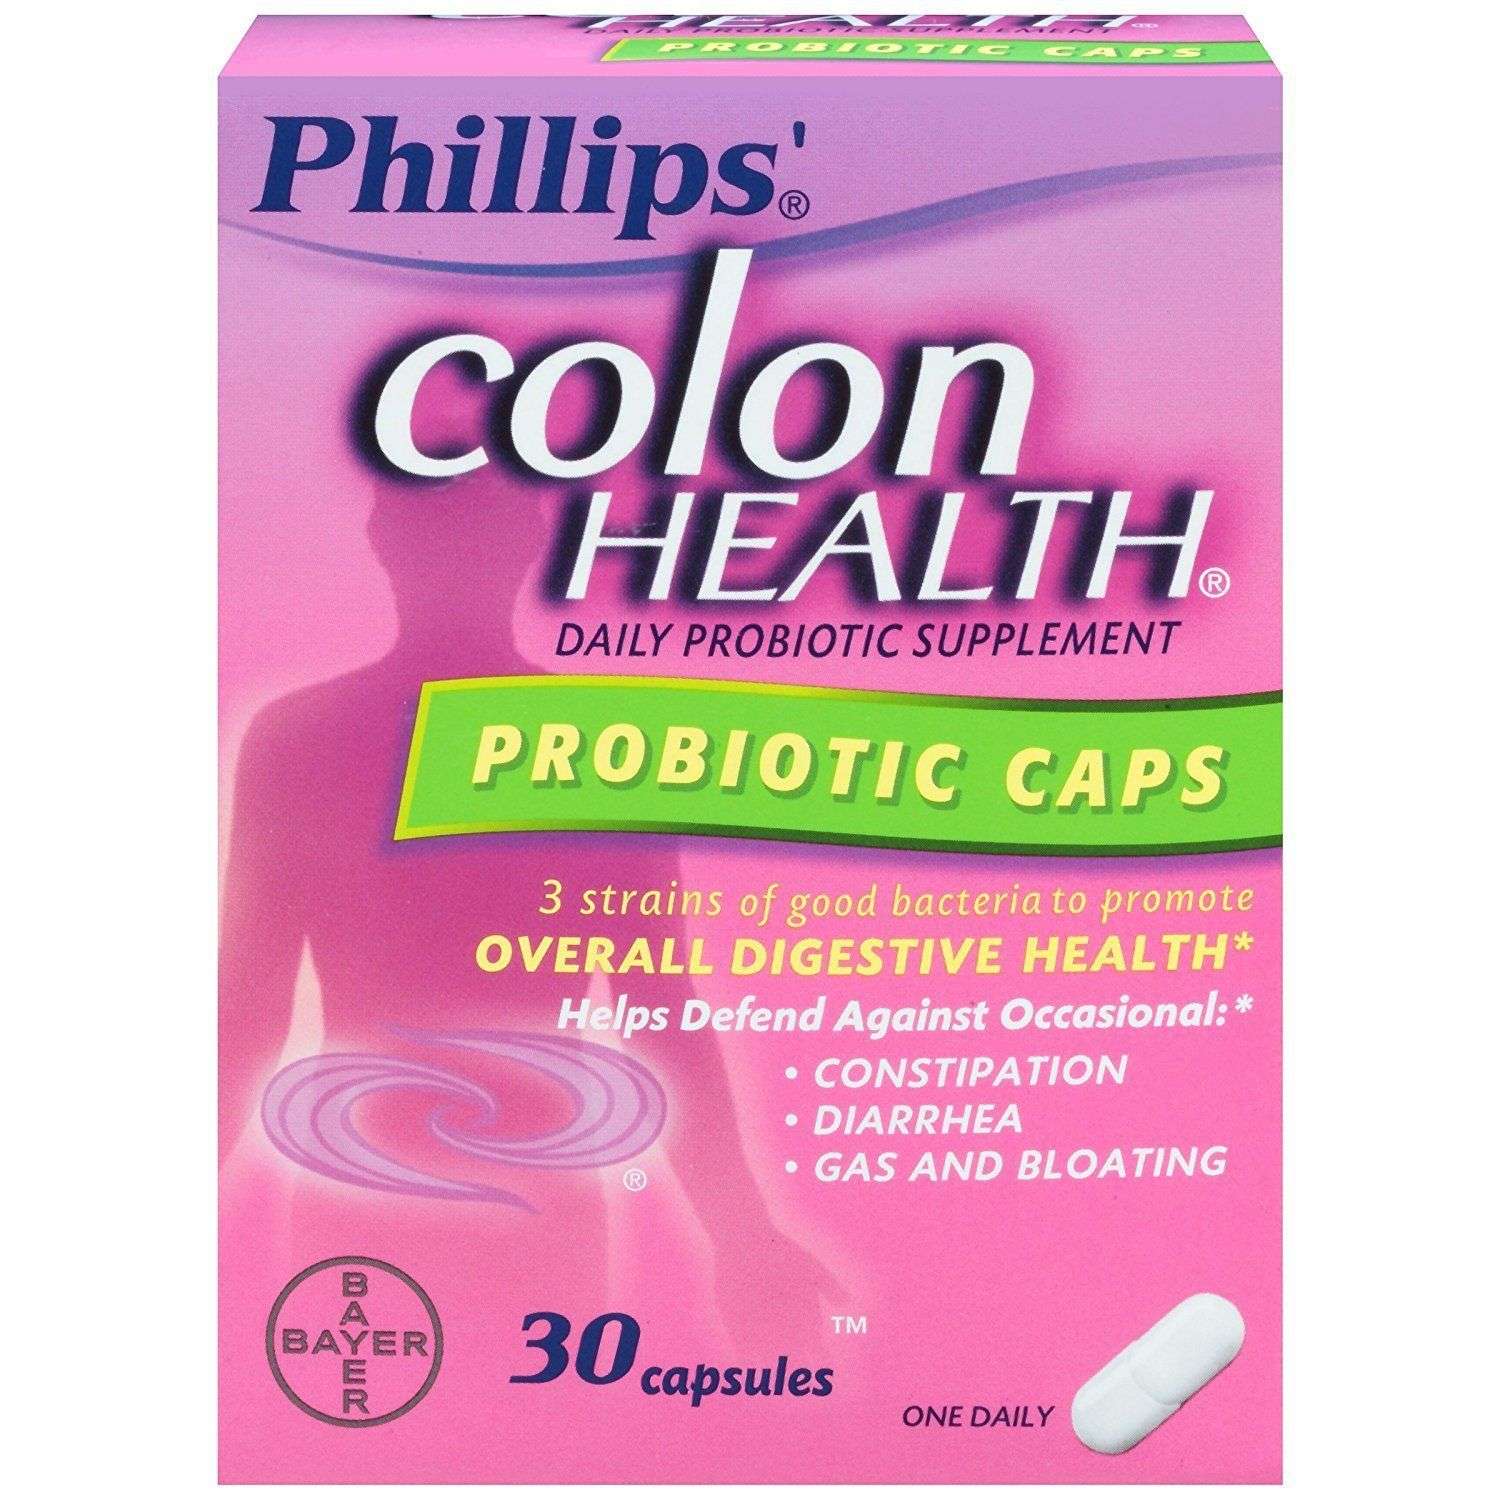 Phillips Colon Health Daily Probiotic Caps Supplement 30 Count